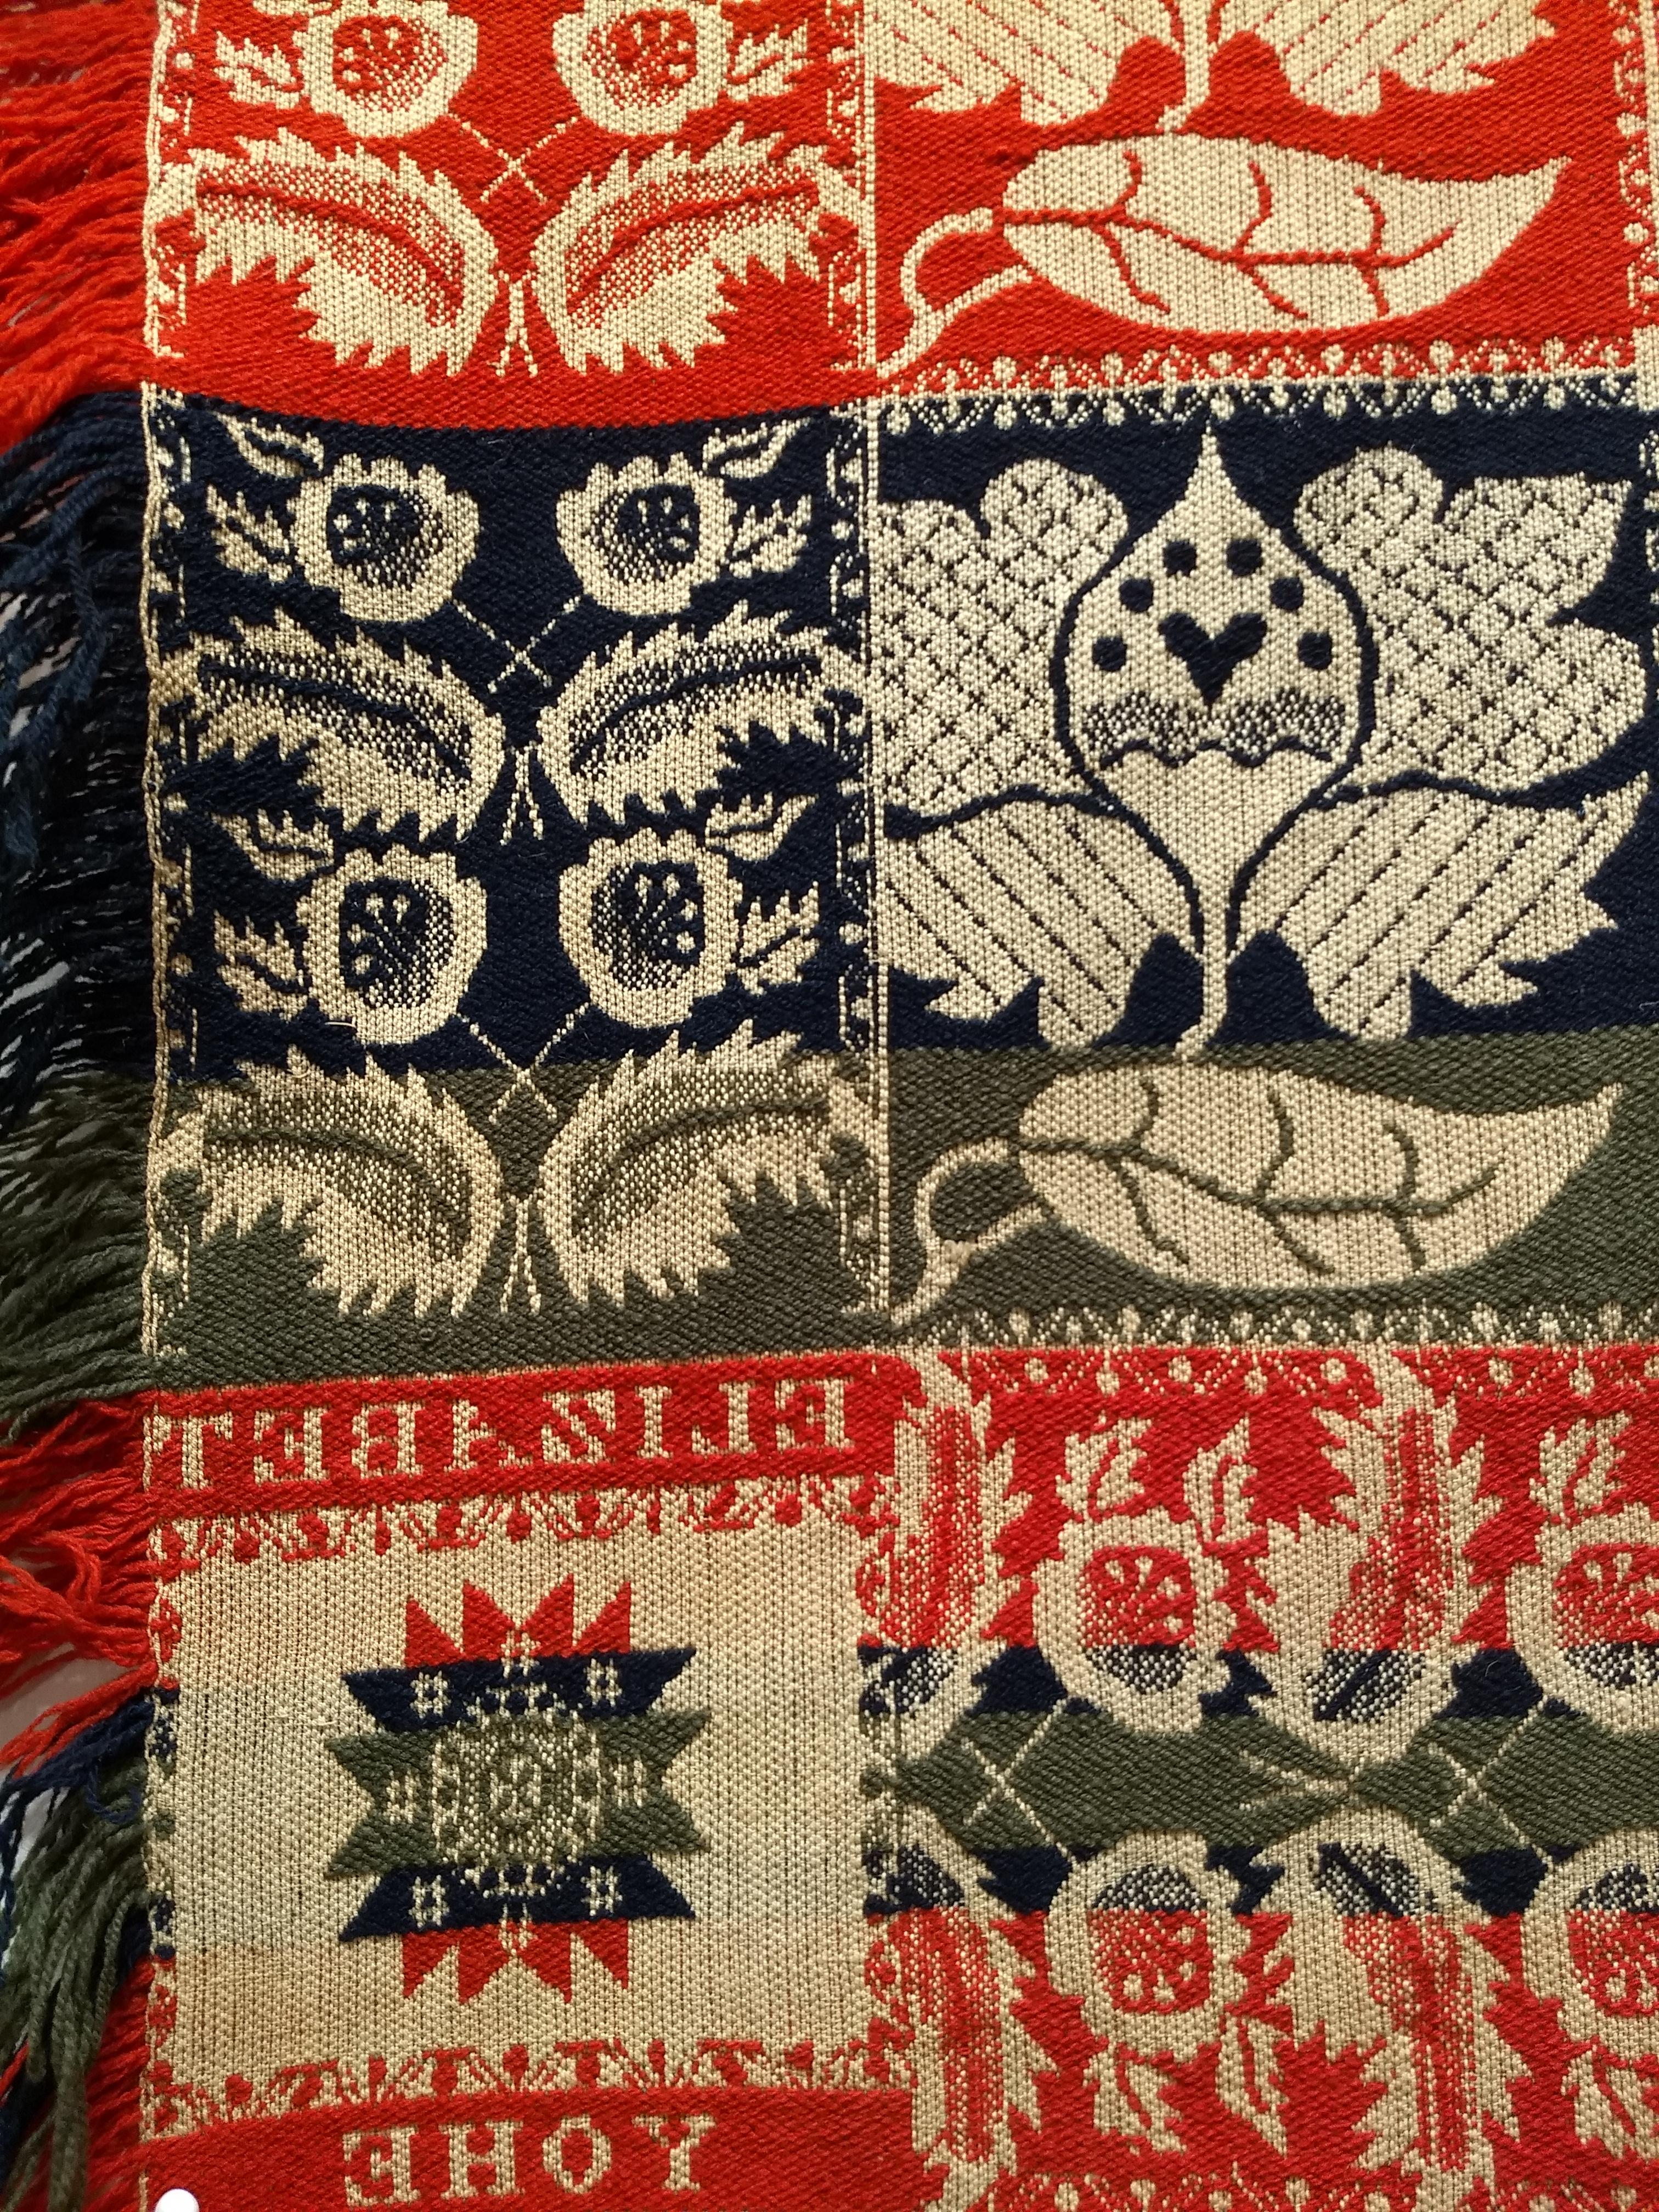 antique woven coverlets